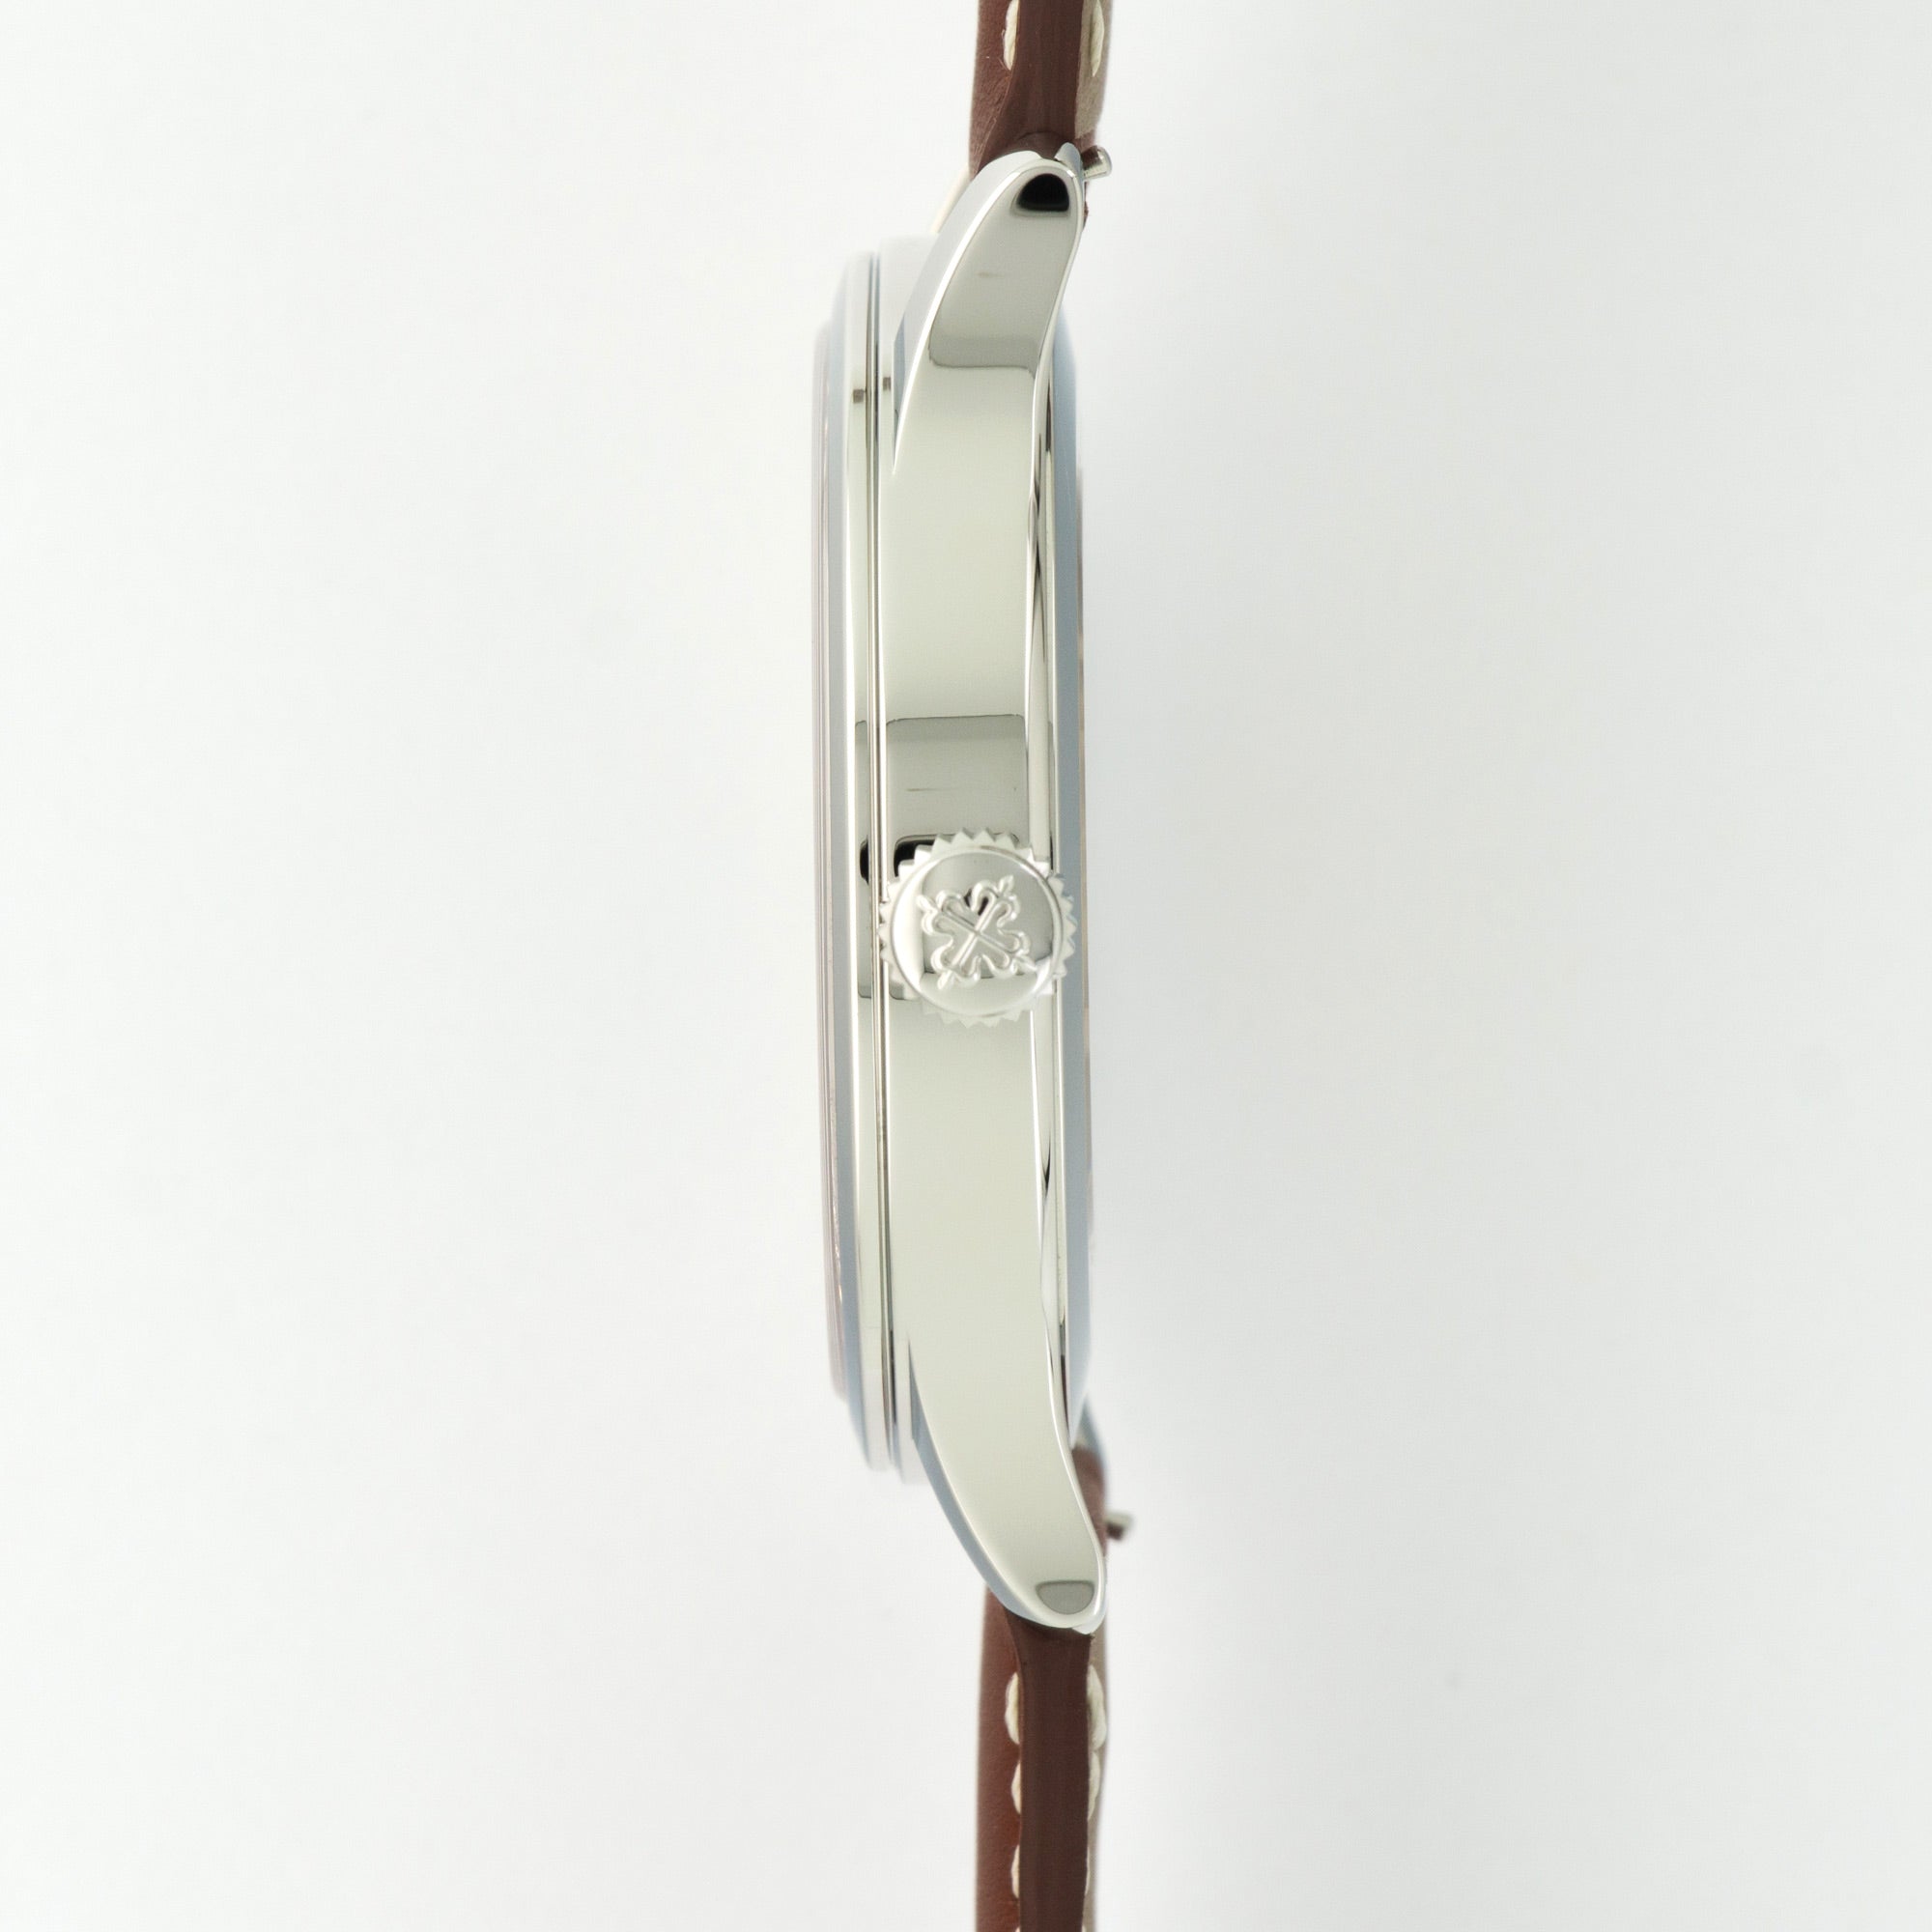 Patek Philippe - Patek Philippe Stainless Steel Pilot Watch Ref. 5522A - The Keystone Watches